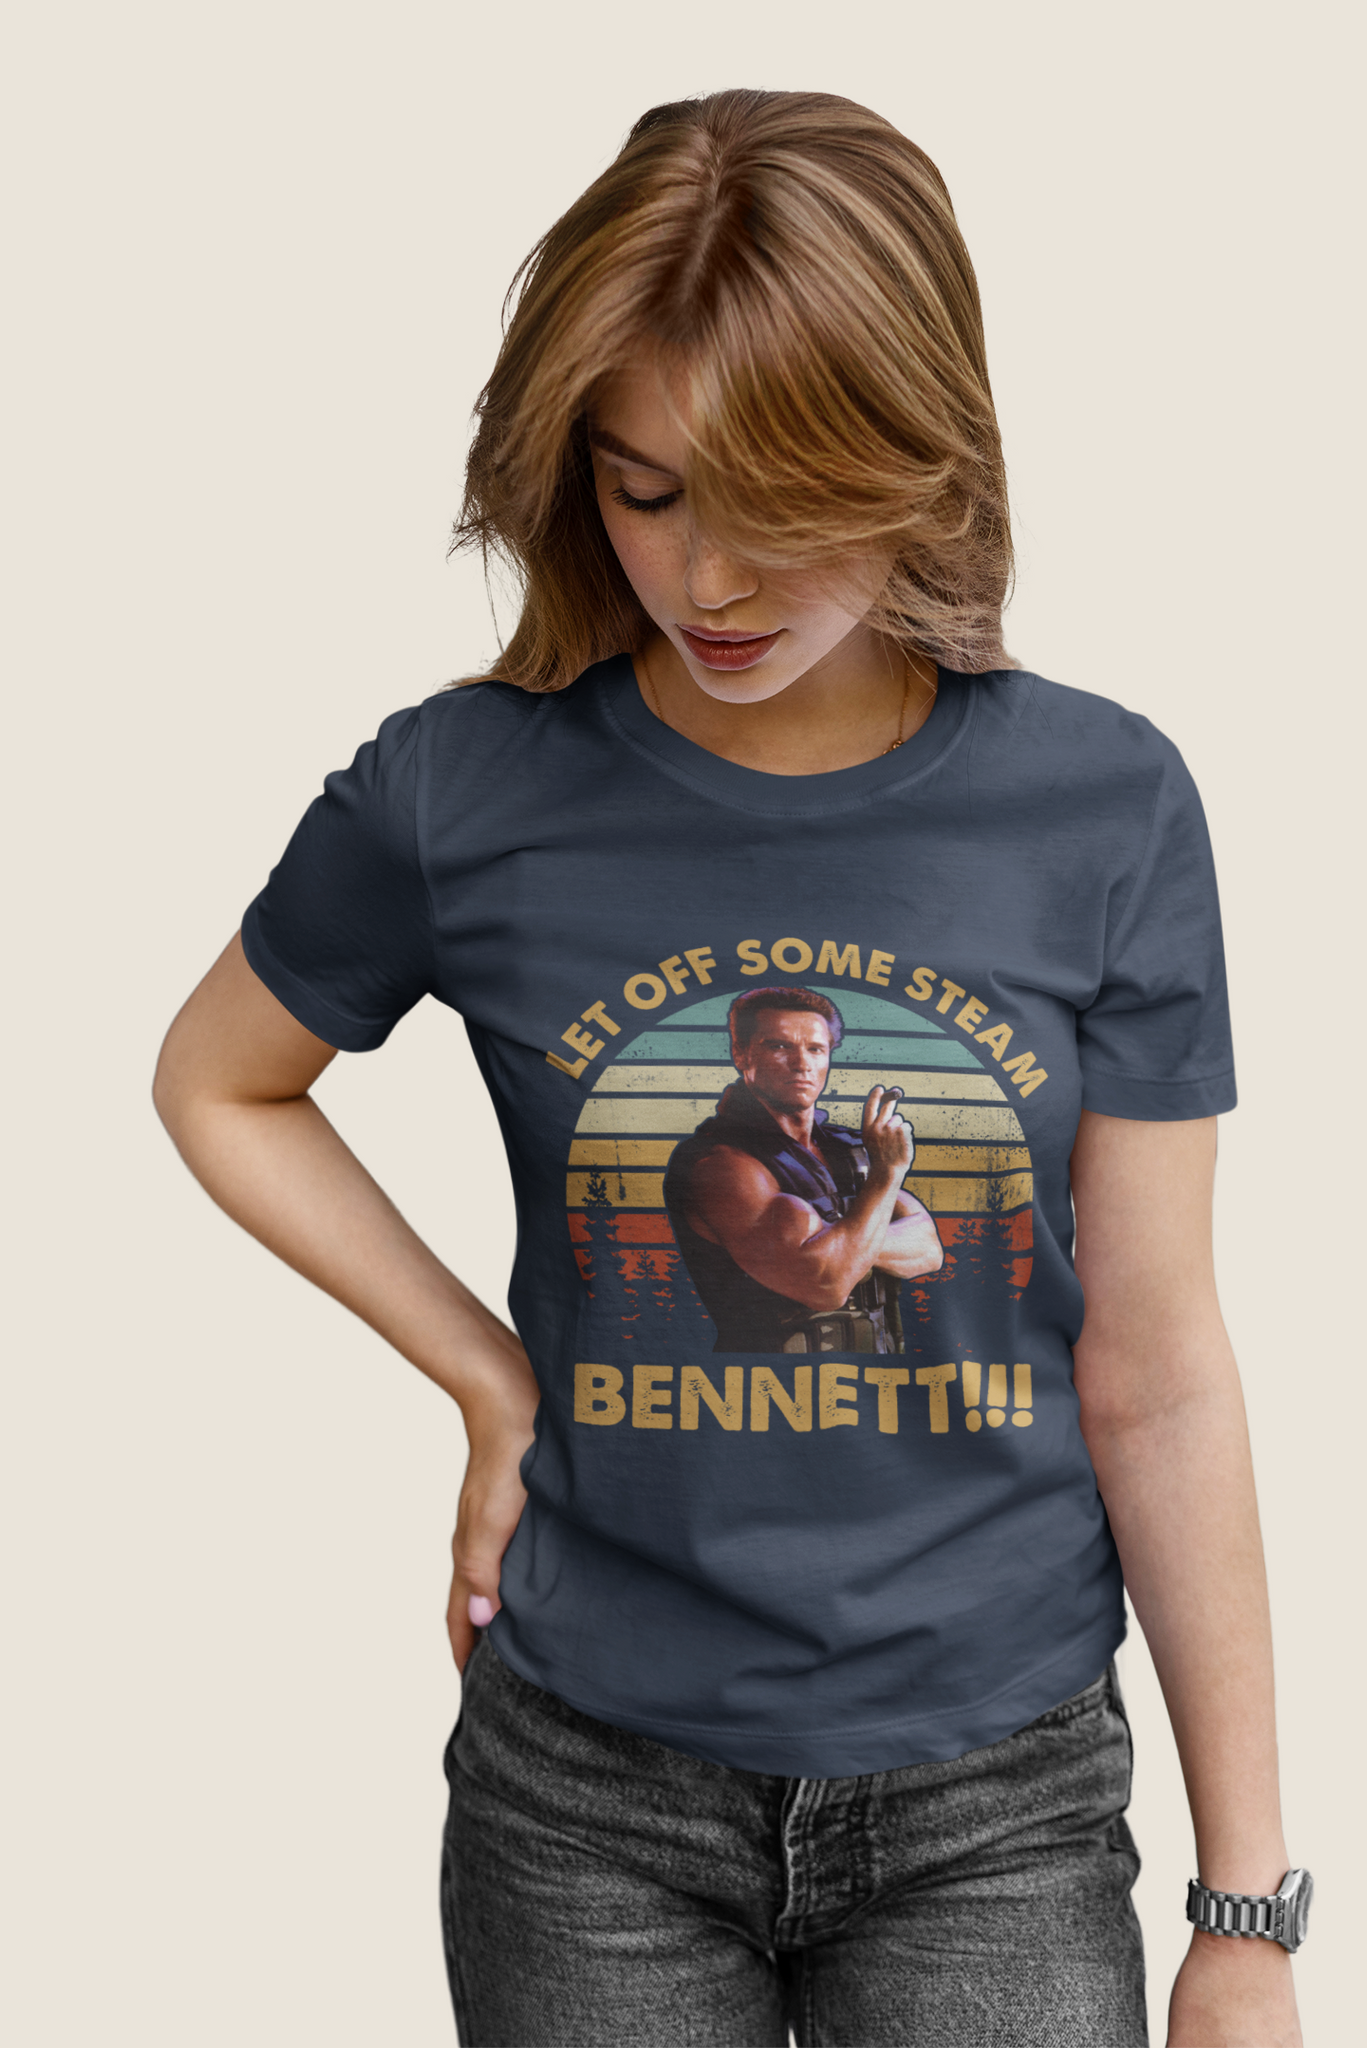 Commando Vintage T Shirt, John Matrix T Shirt, Let Off Some Steam Bennett Tshirt